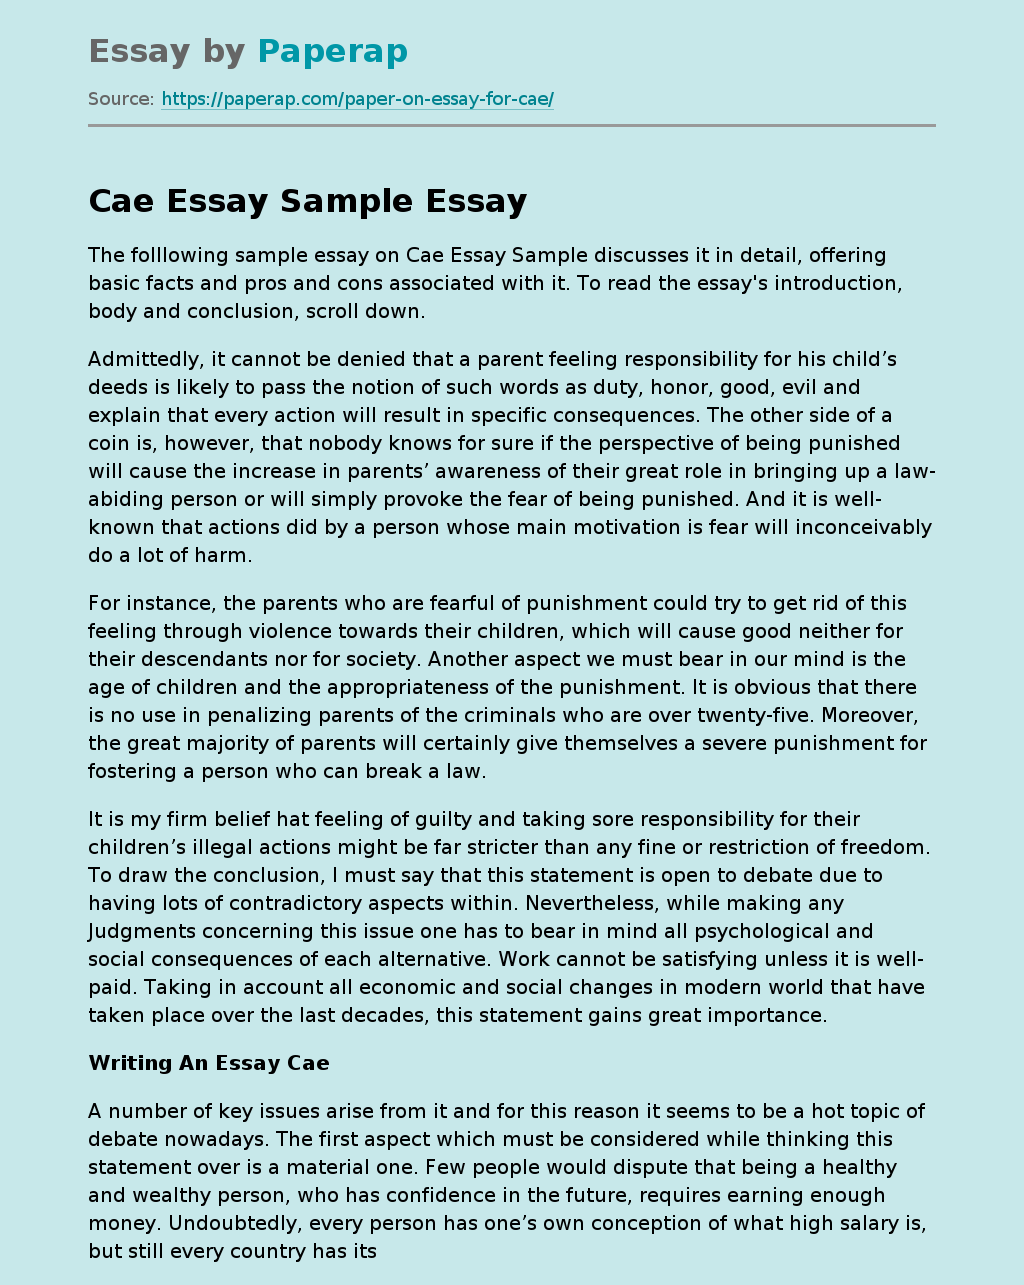 Cae Essay Sample